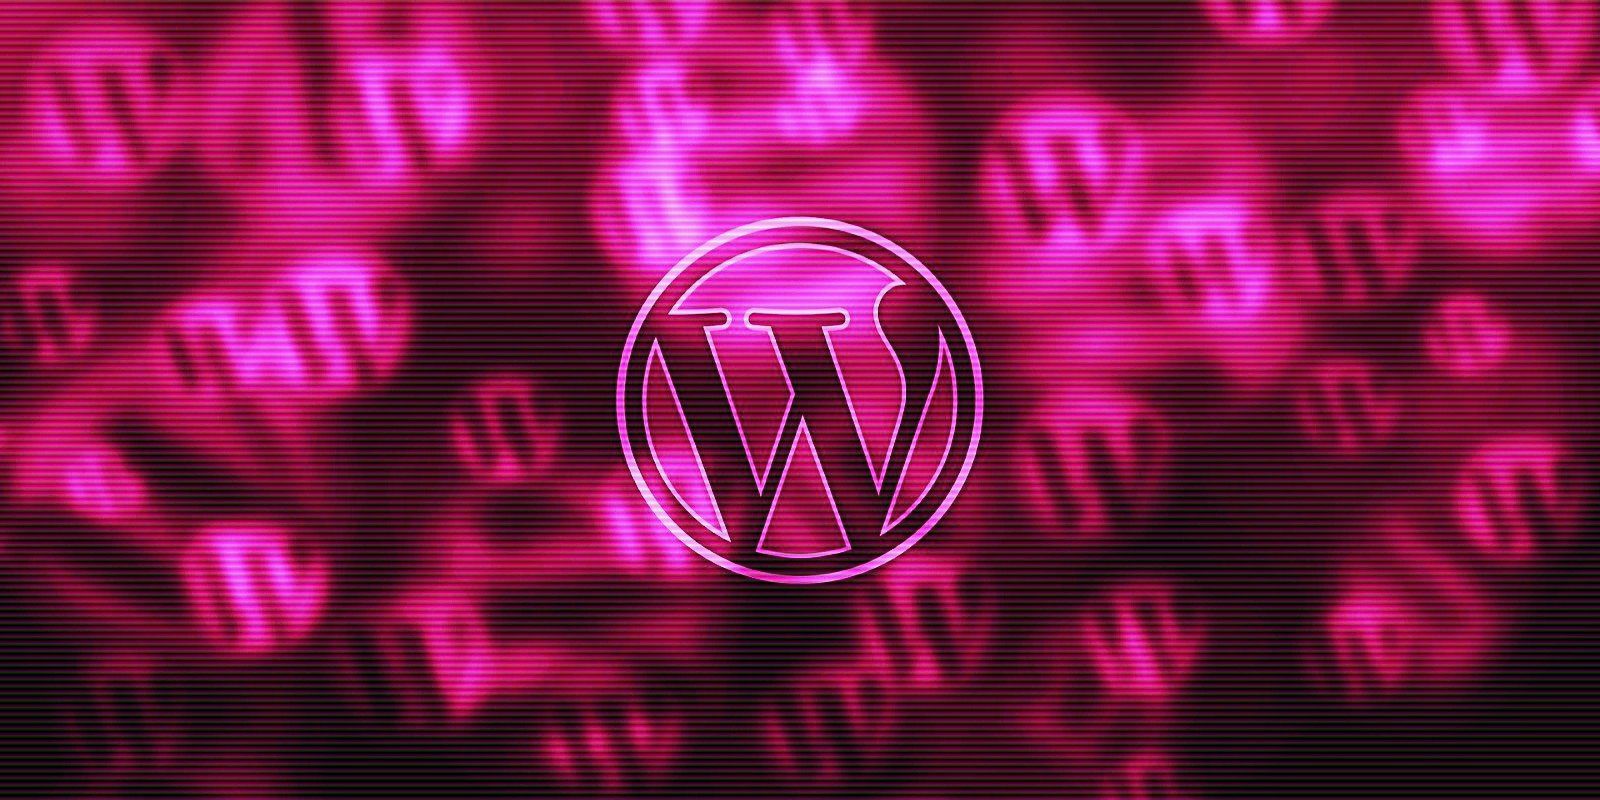 WordPress custom field plugin bug exposes over 1M sites to XSS attacks – Source: www.bleepingcomputer.com